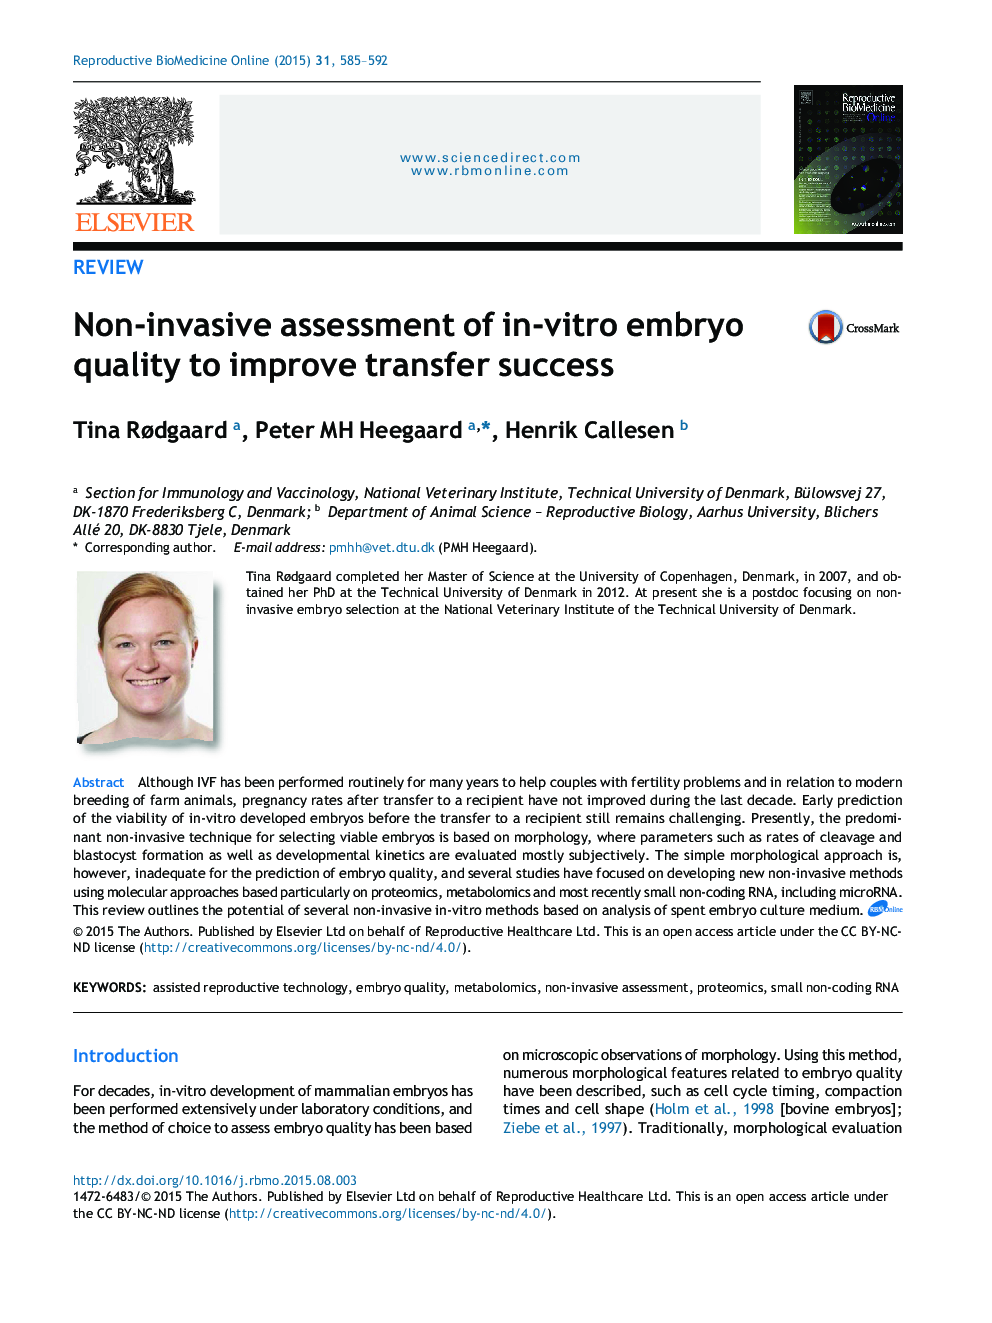 Non-invasive assessment of in-vitro embryo quality to improve transfer success